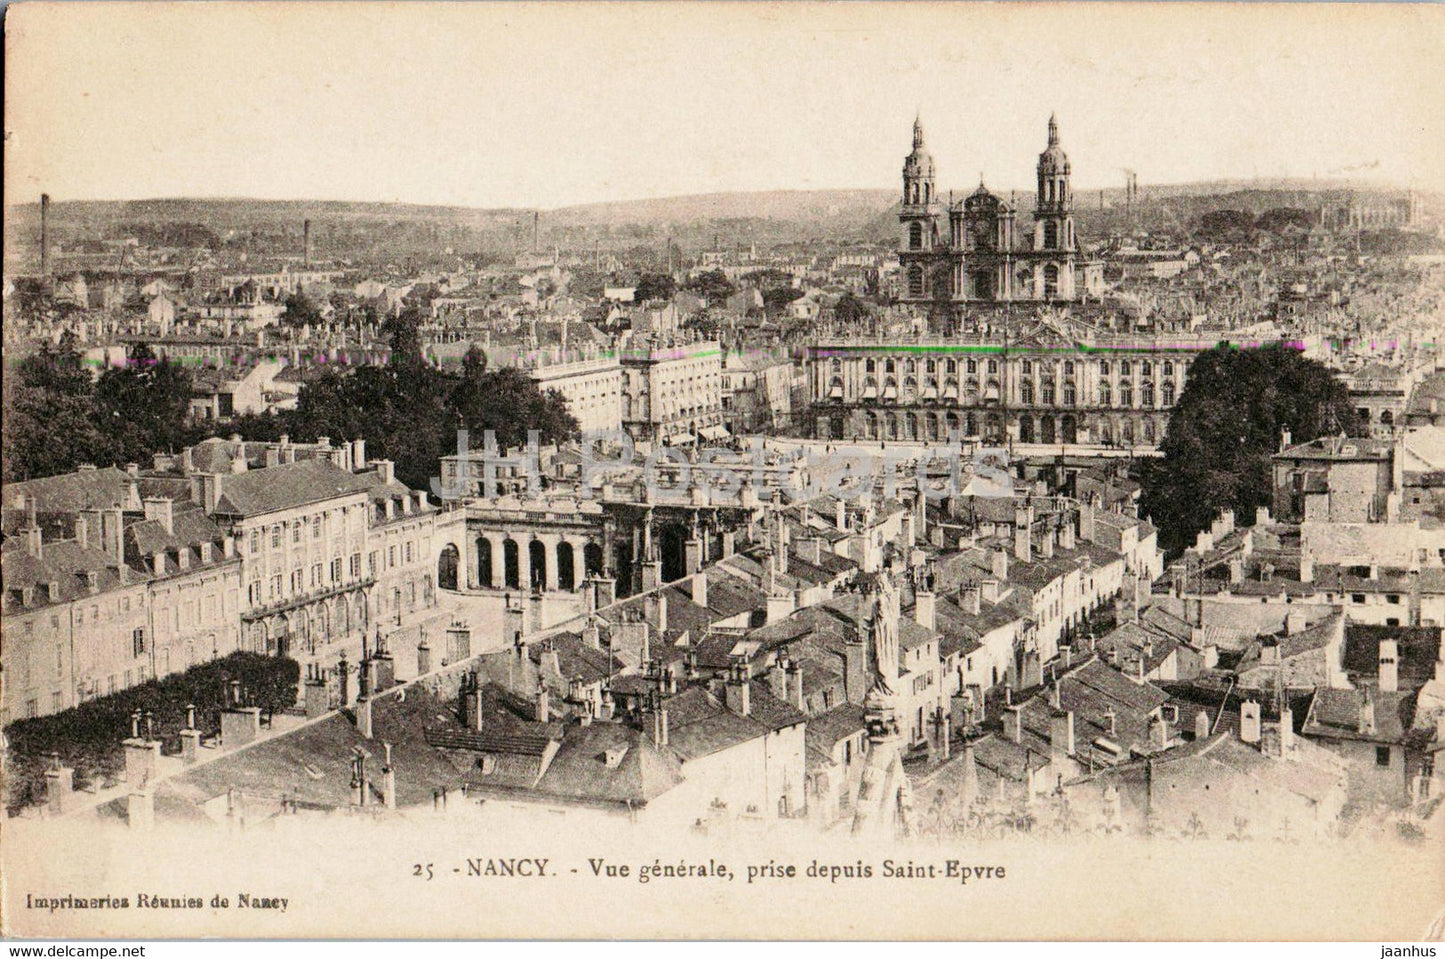 Nancy - Vue Generale prise depuis Saint Epvre - 25 - old postcard - 1917 - France - used - JH Postcards